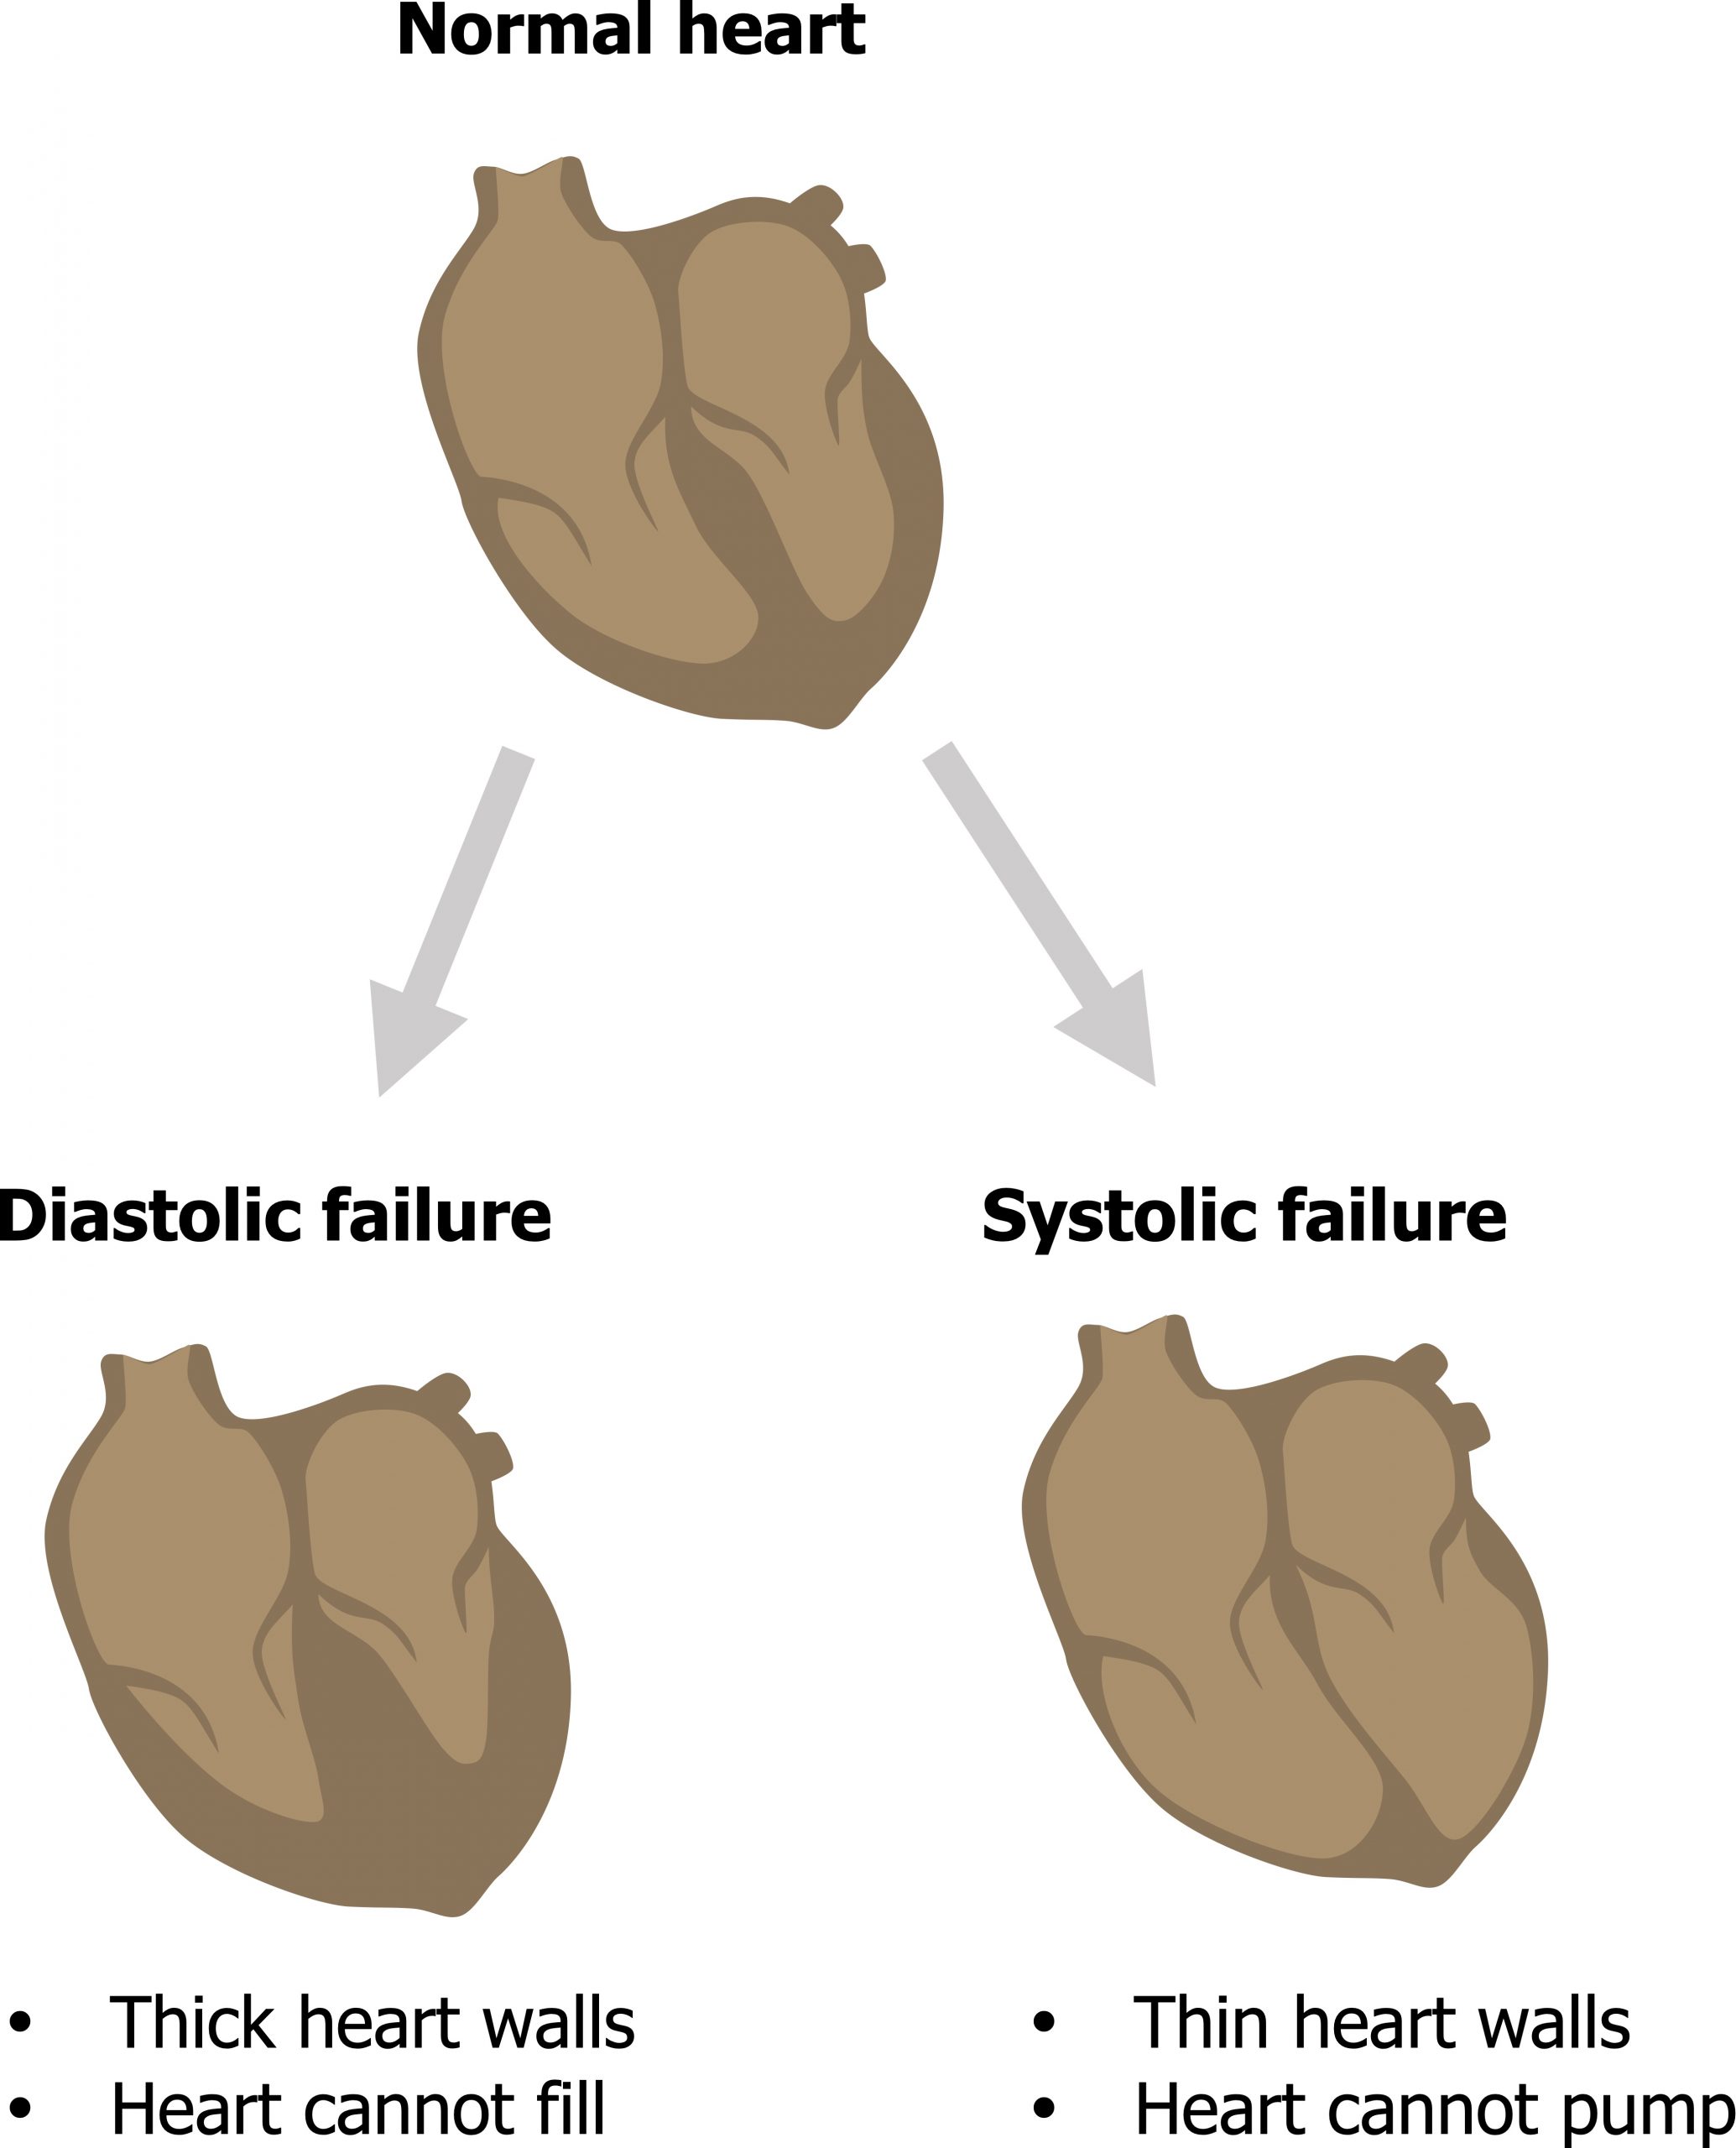 Diastolic failure: thick heart walls, heart cannot fill. Systolic failure: thin heart walls, heart cannot pump.